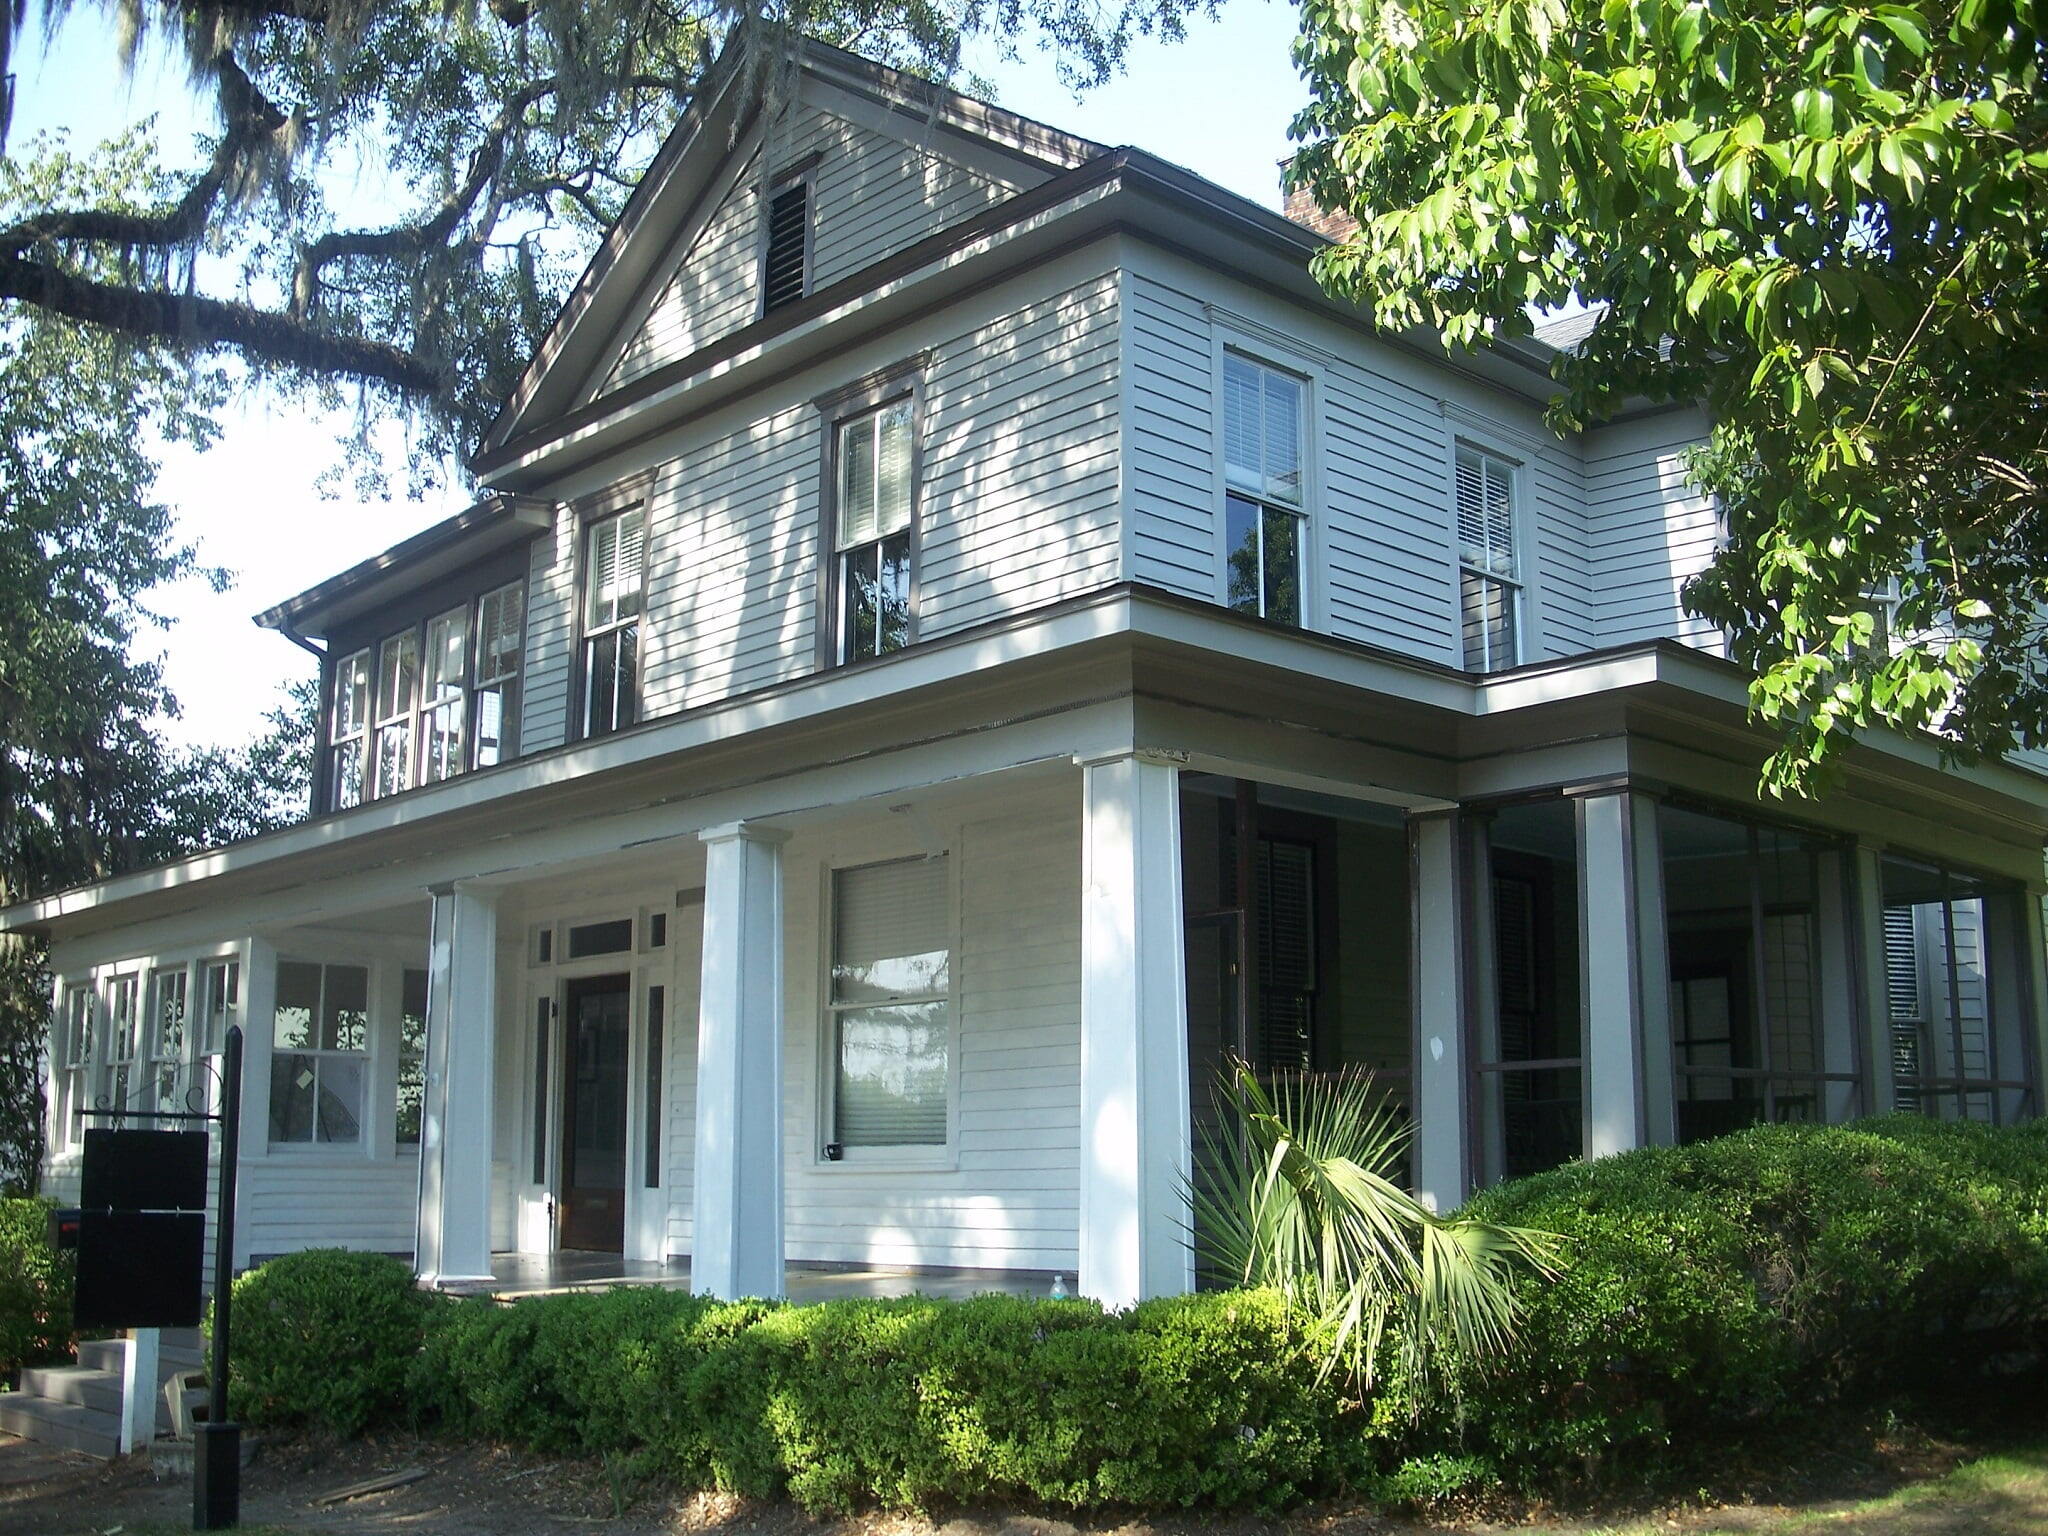 Tallahassee - Tallahassee, Florida: Calhoun Street Historic District